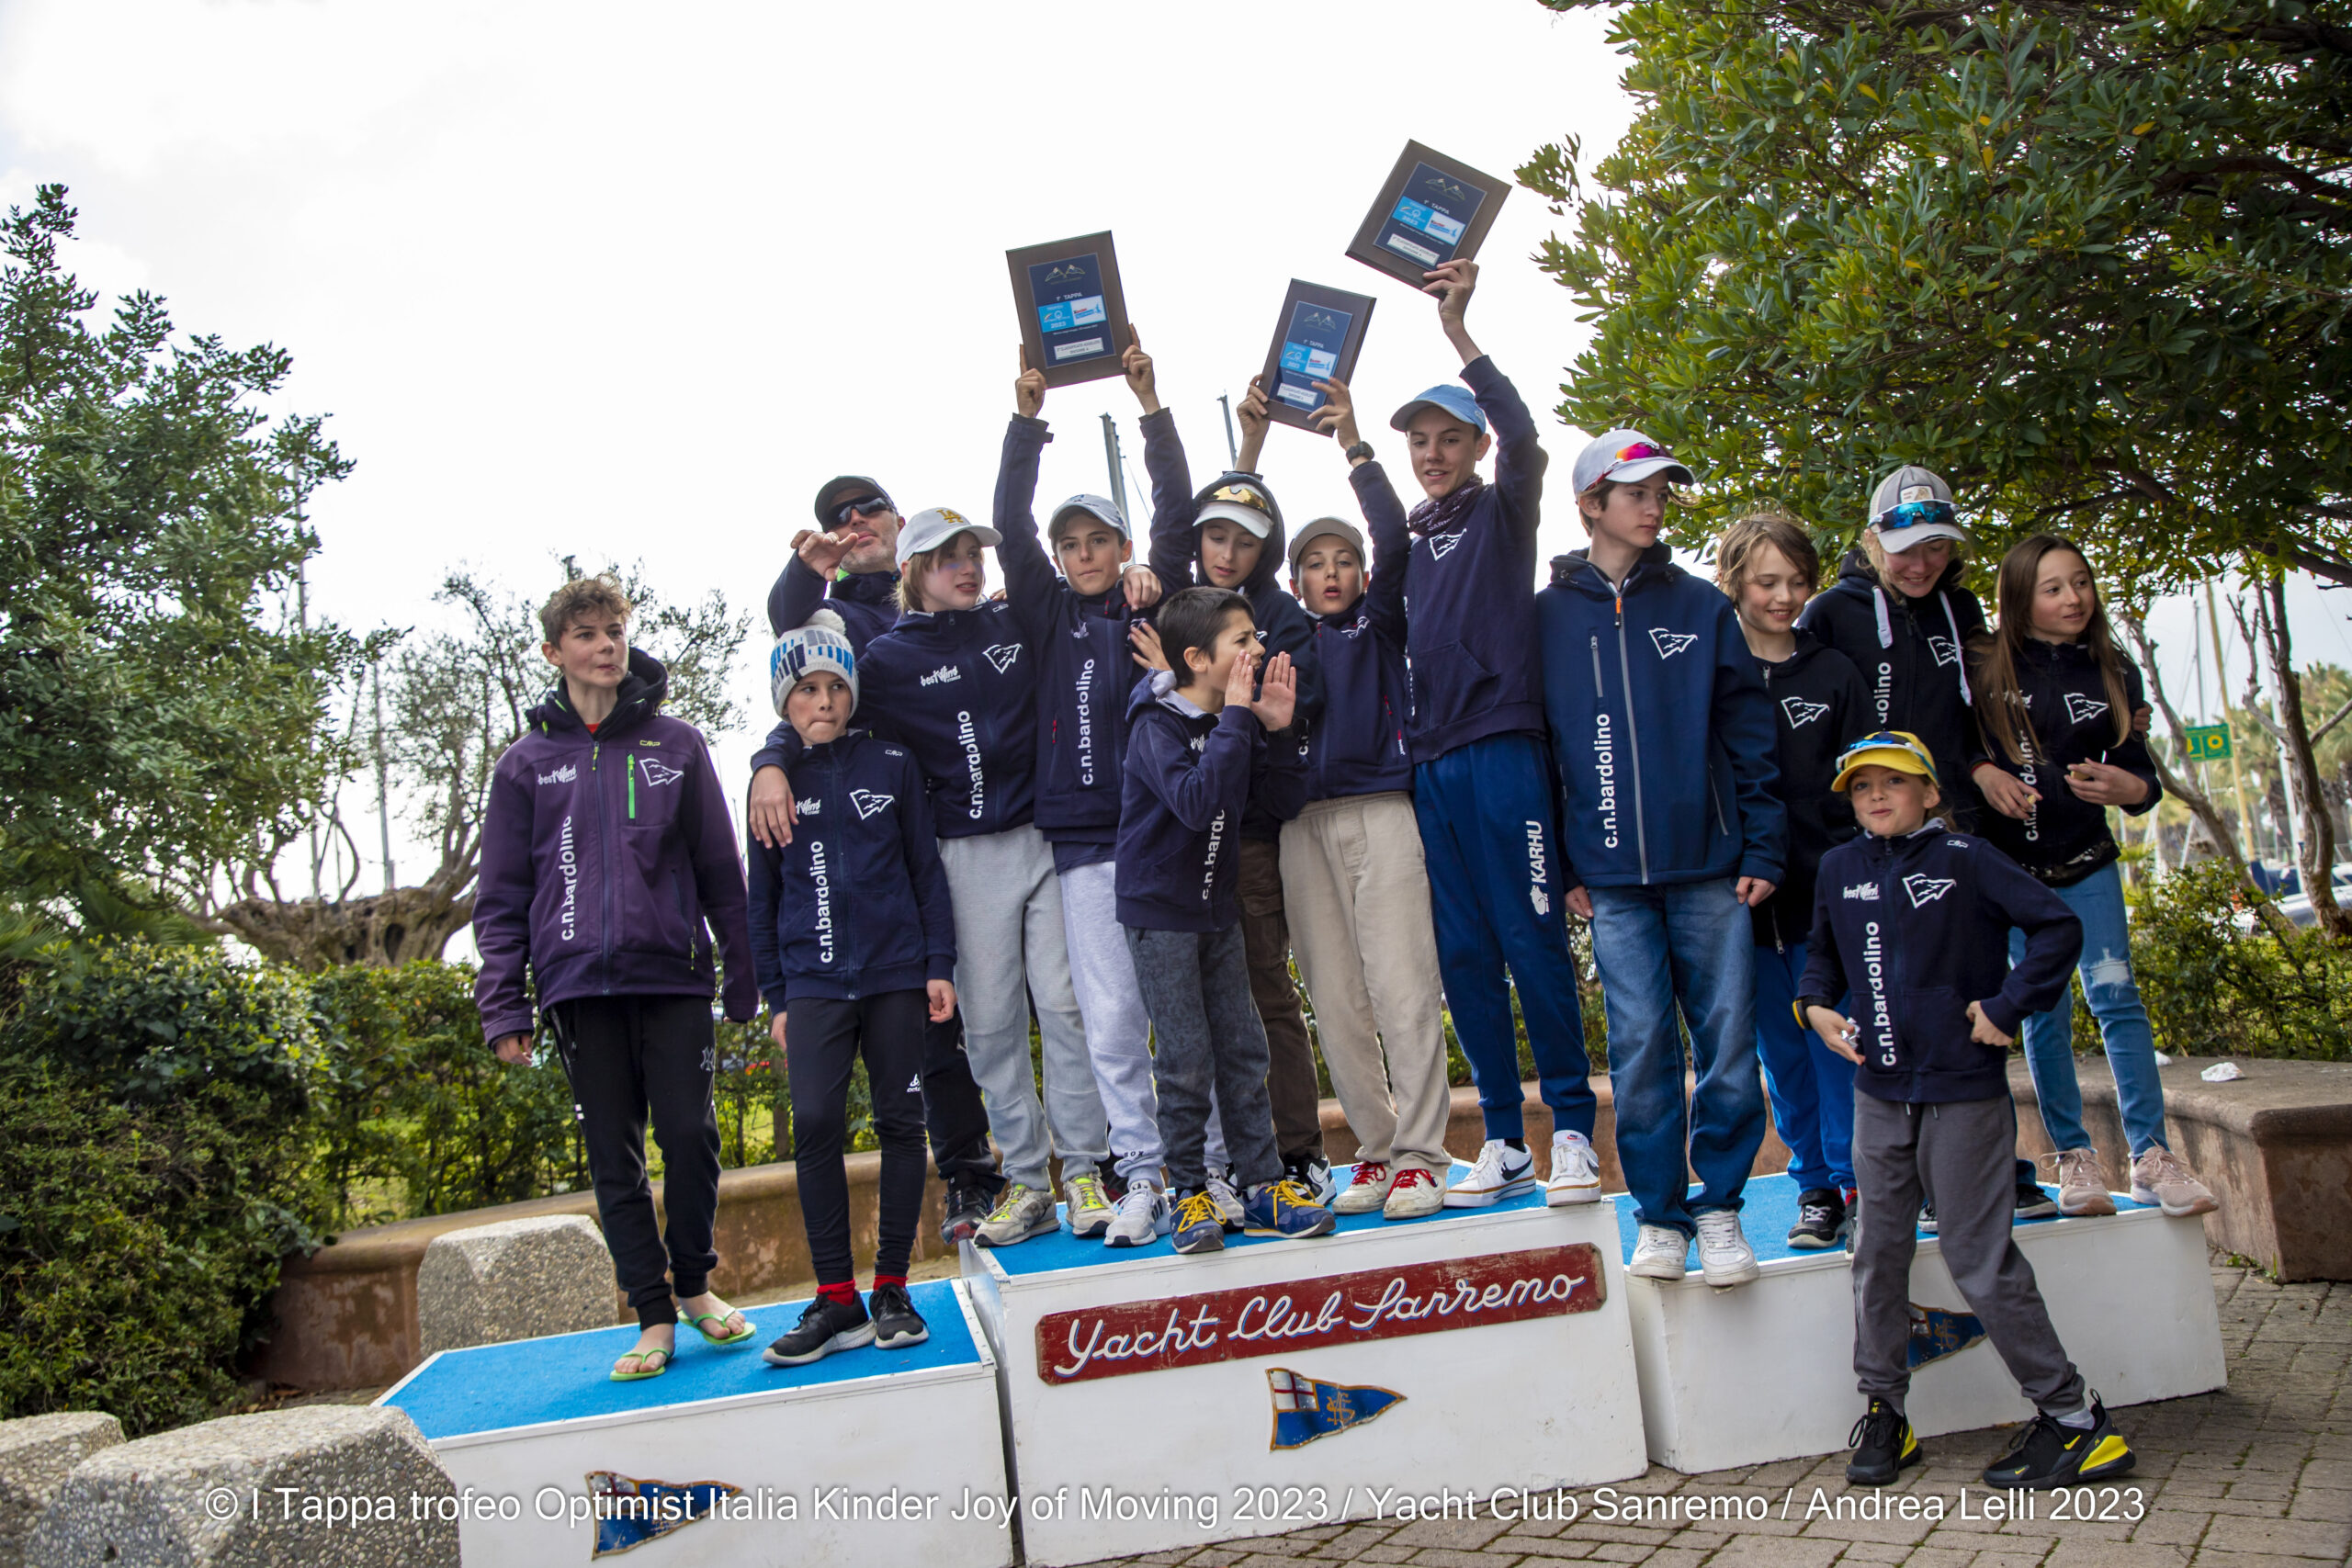 Trofeo Optimist Italia Kinder Joy Of Moving, accadde a Sanremo